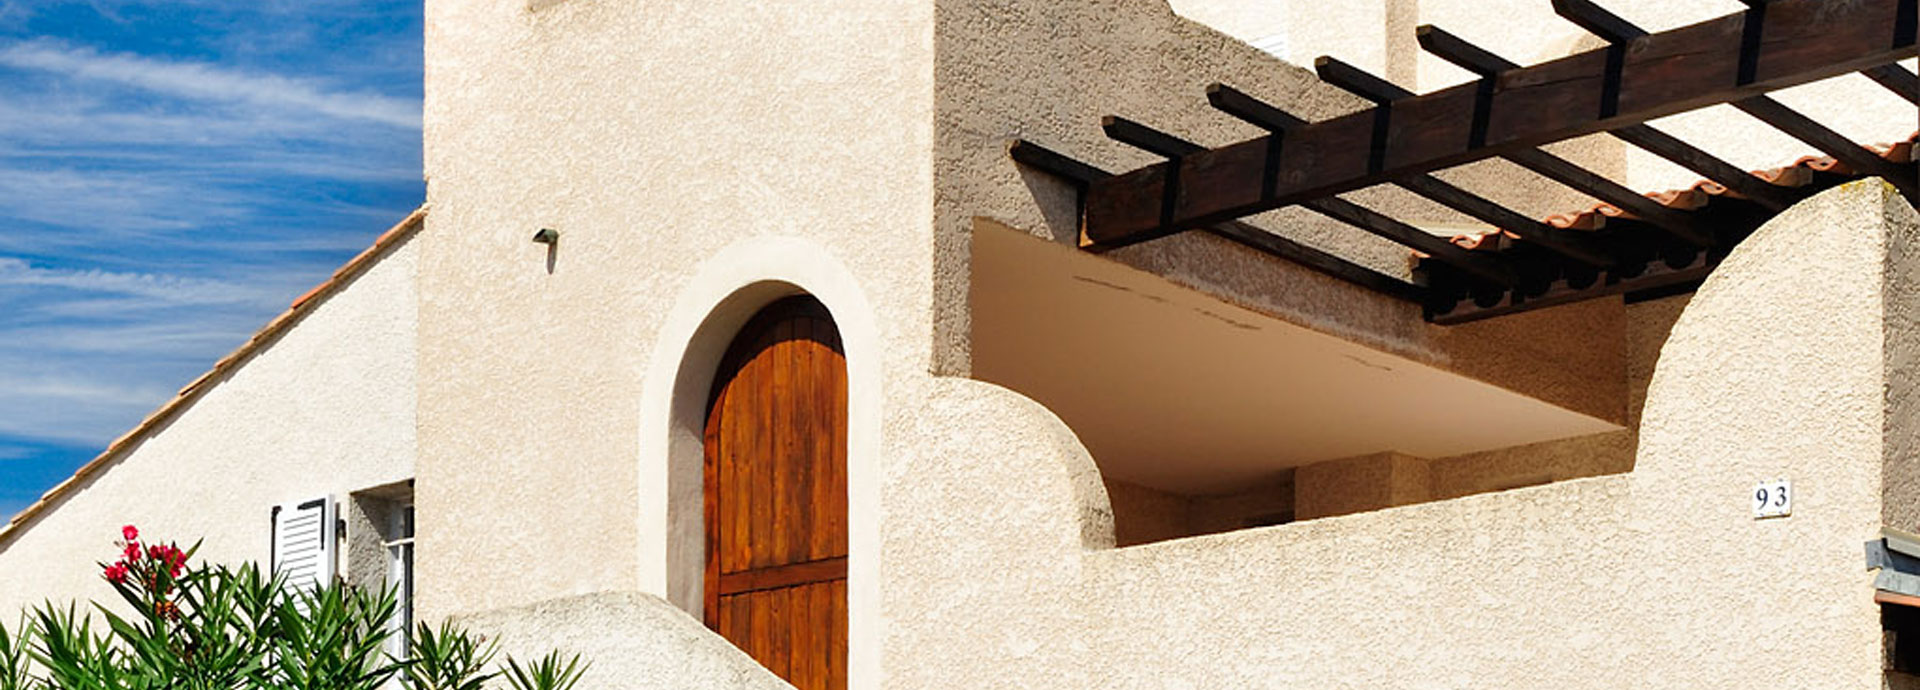 Holiday rental at Cap d'Agde : Samaria Village residence